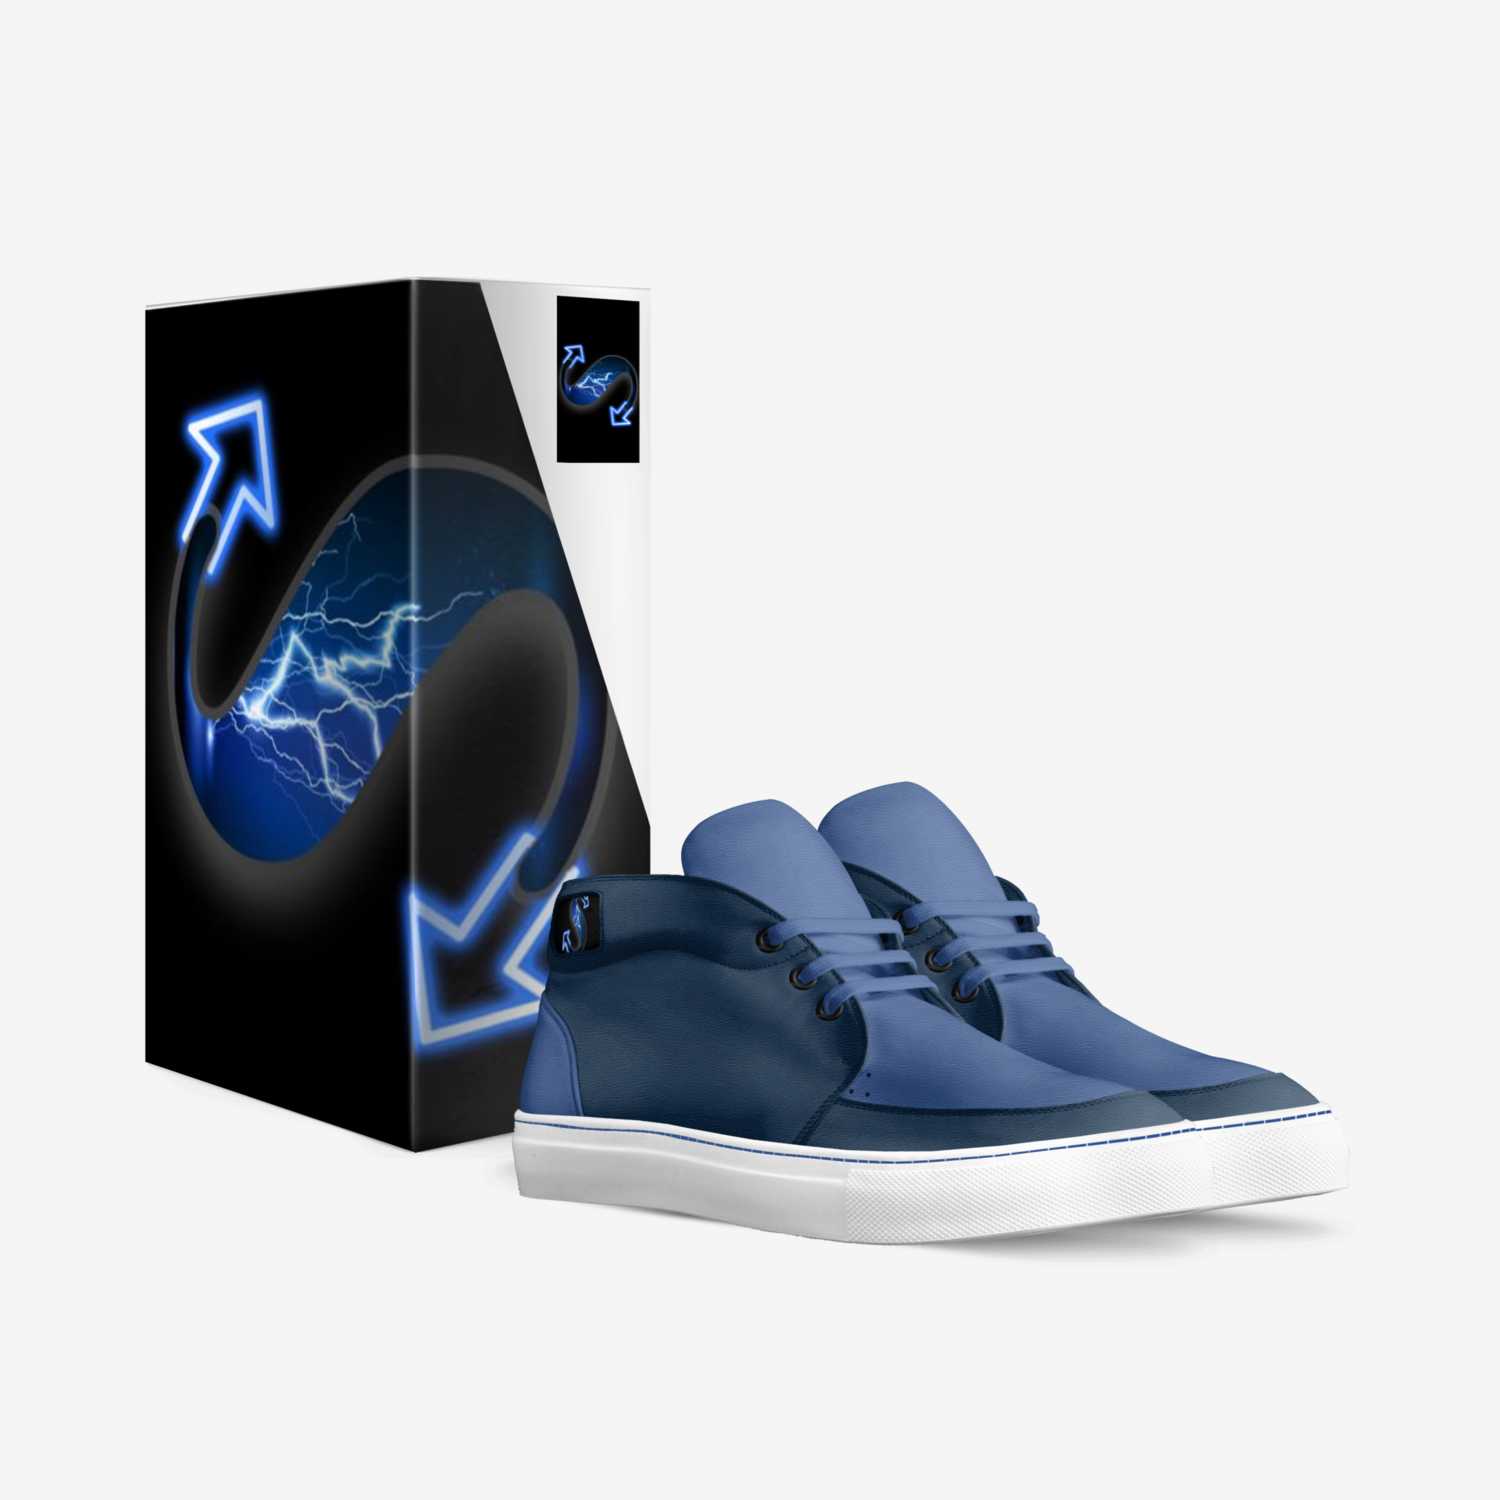 Stadic Dappa custom made in Italy shoes by Khai Petersen | Box view